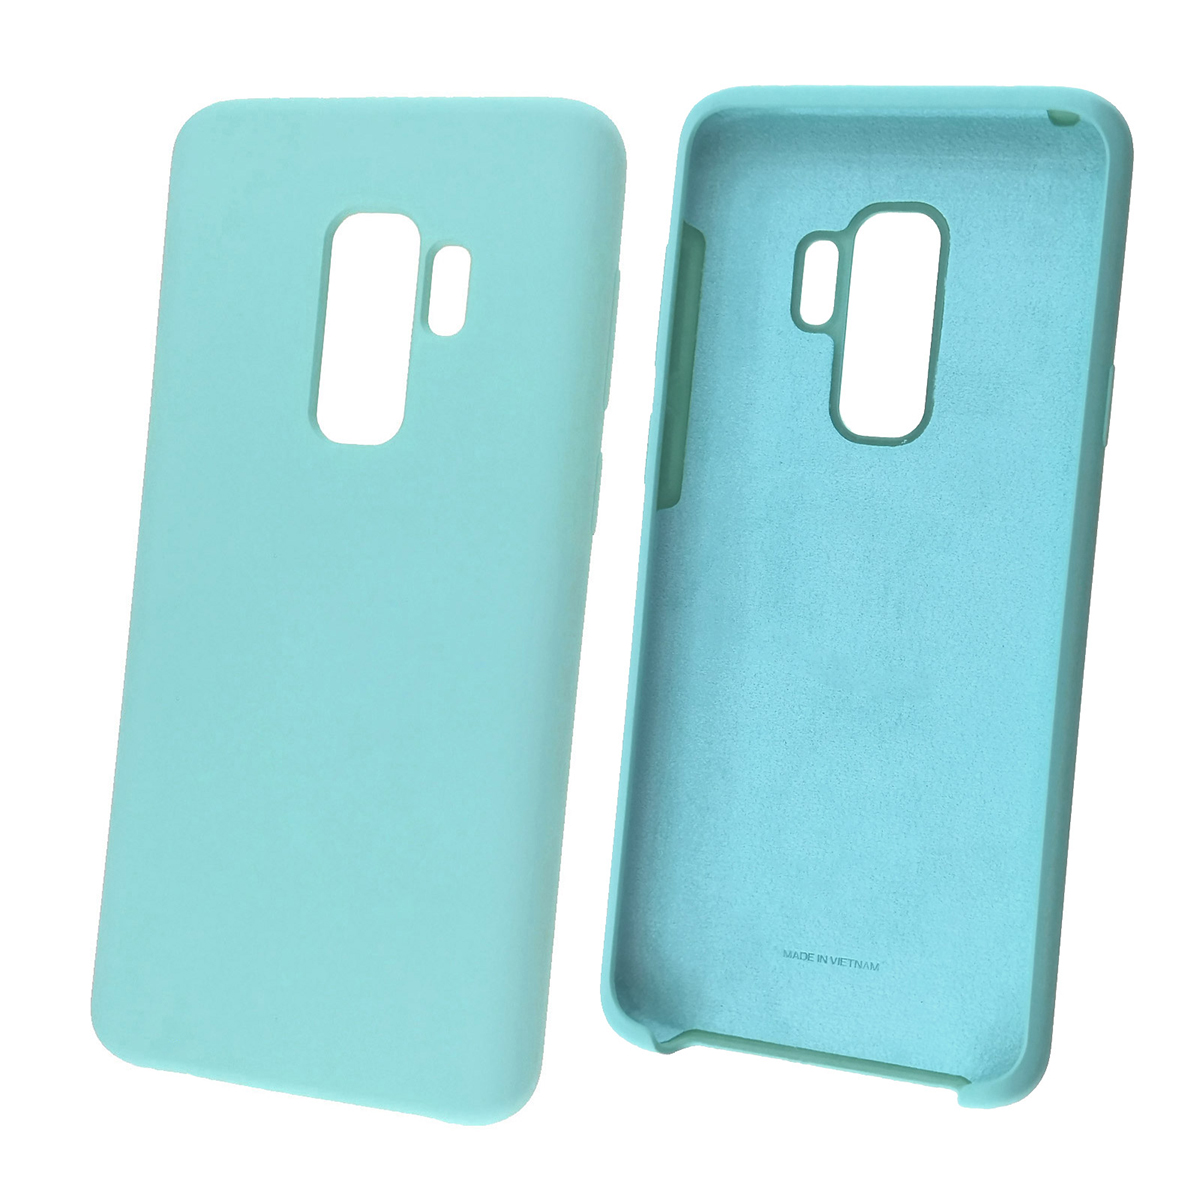 Чехол накладка Silicon Cover для SAMSUNG Galaxy S9 Plus (SM-G965), силикон, бархат, цвет бирюзовый.